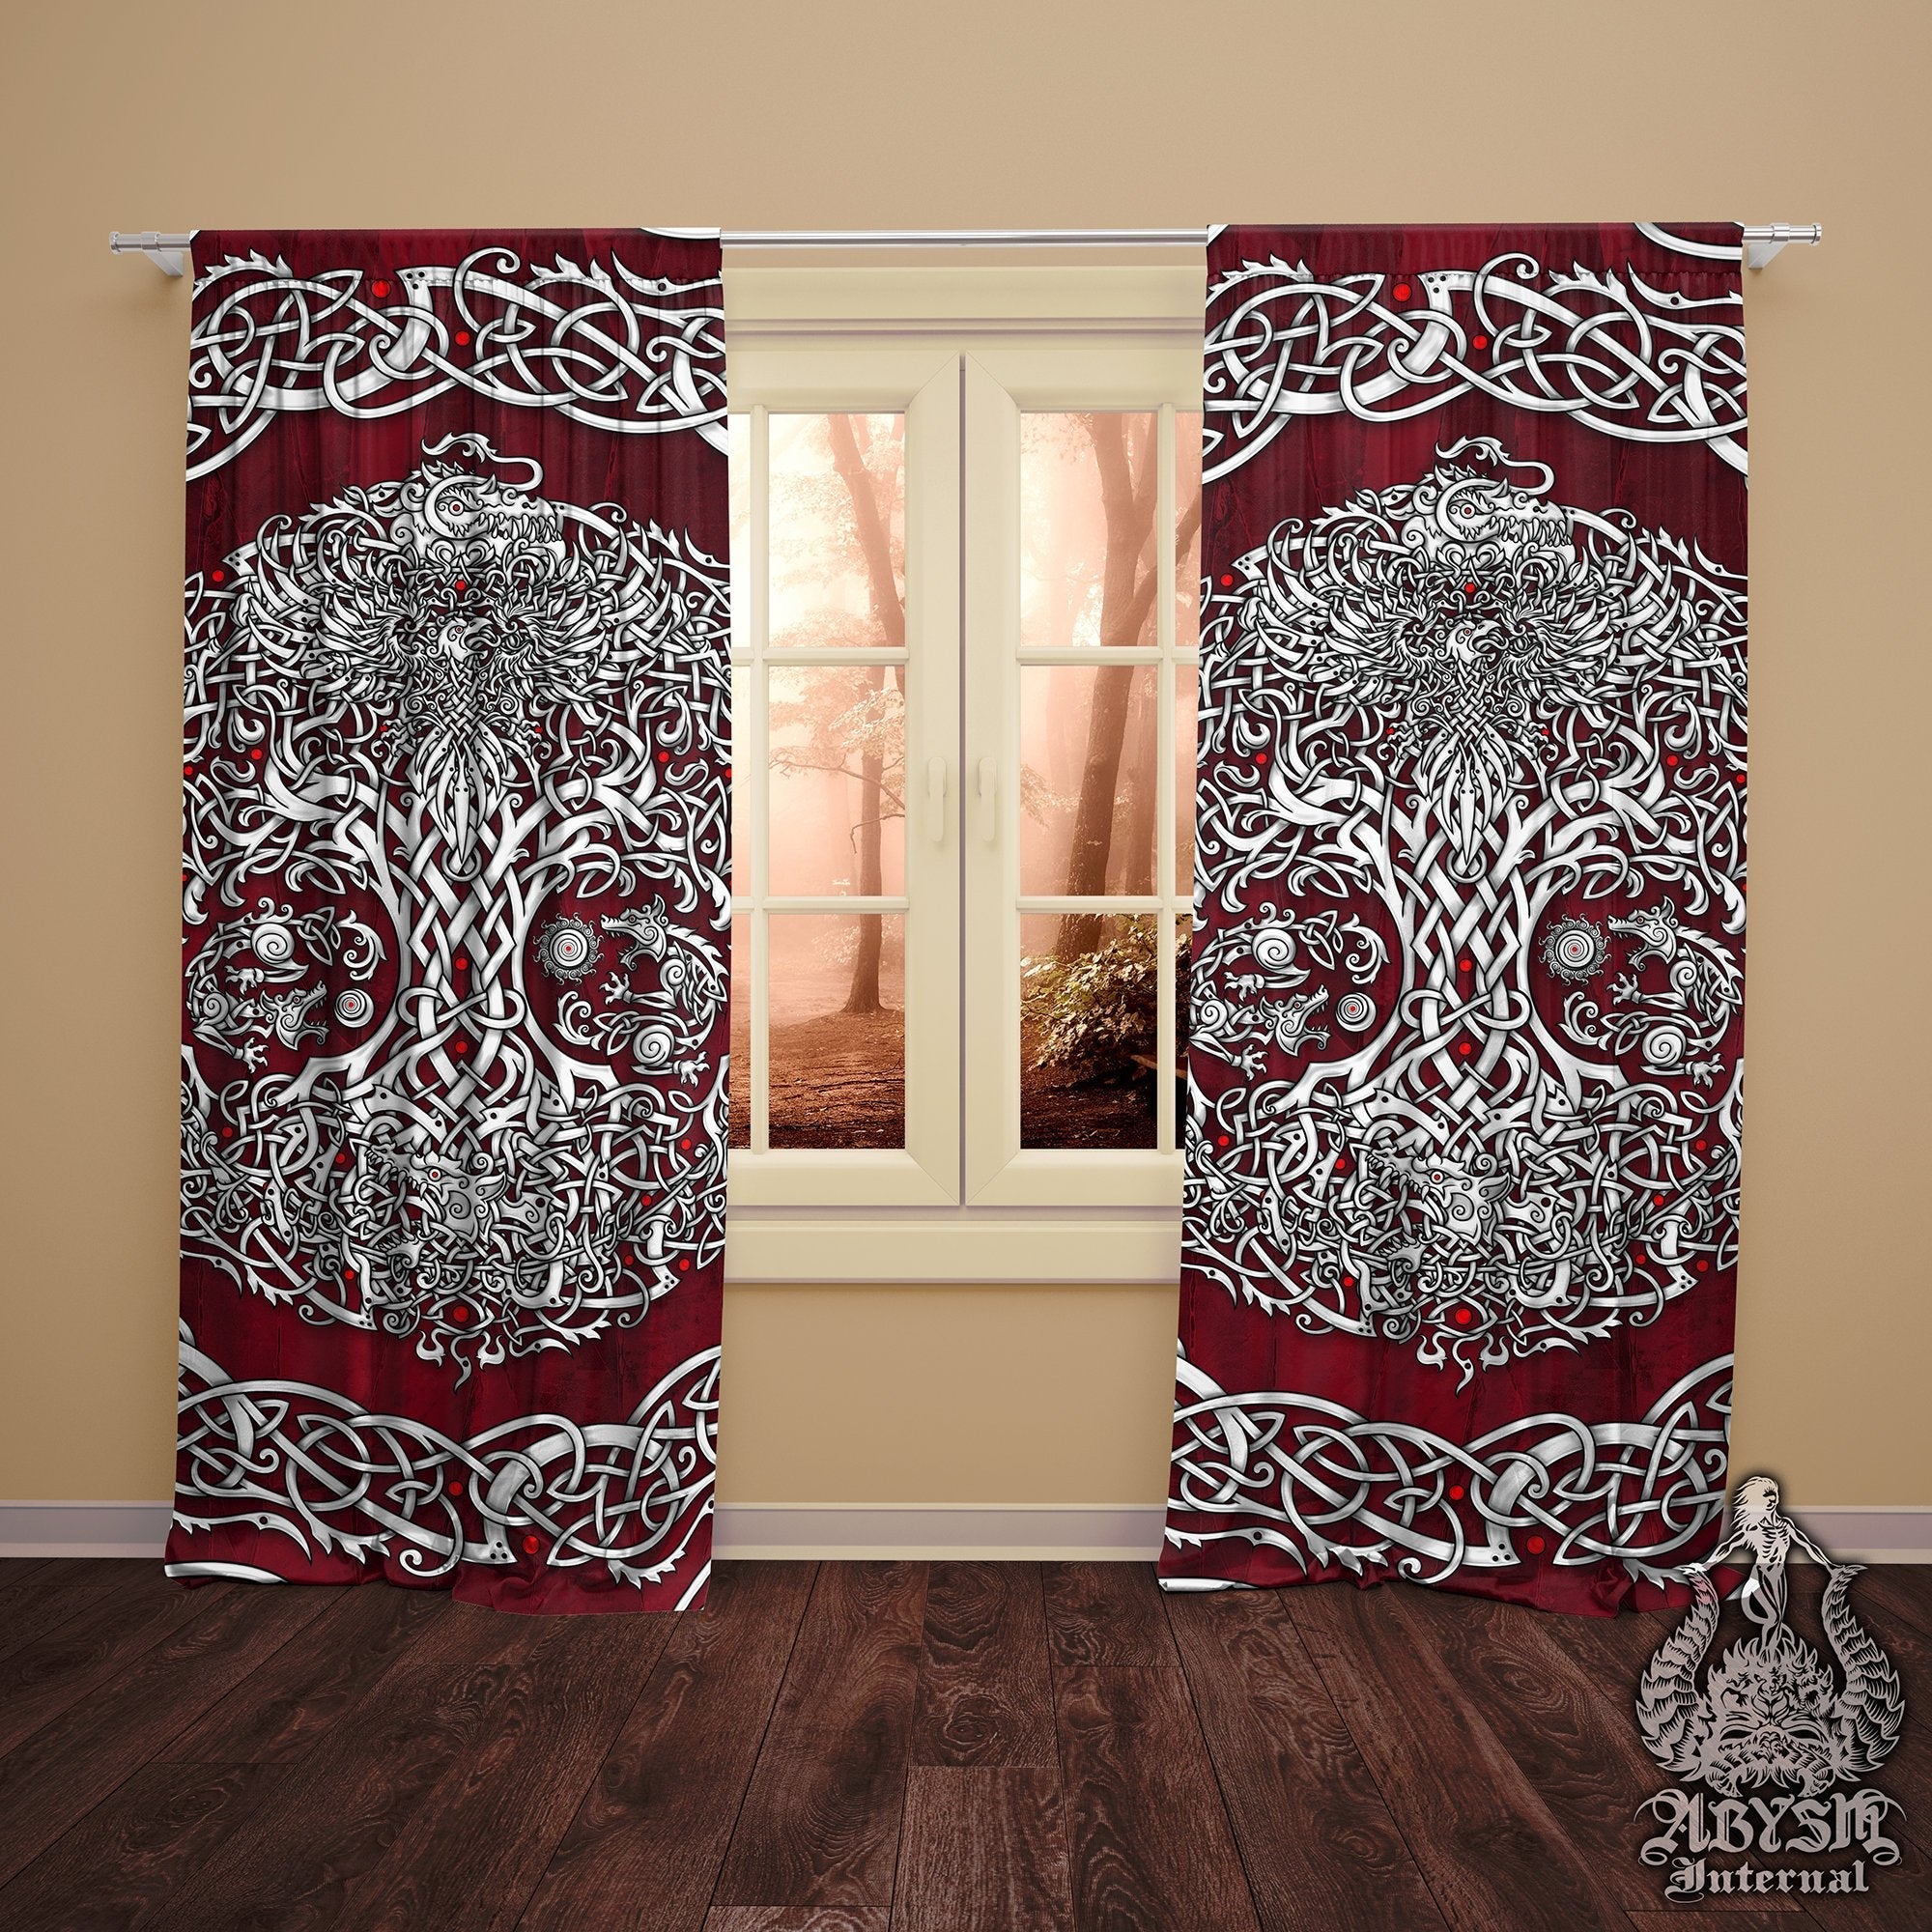 Viking Blackout Curtains, Long Window Panels, Yggdrasil, Nordic Tree of Life, Pagan Room Decor, Art Print - White & Red - Abysm Internal